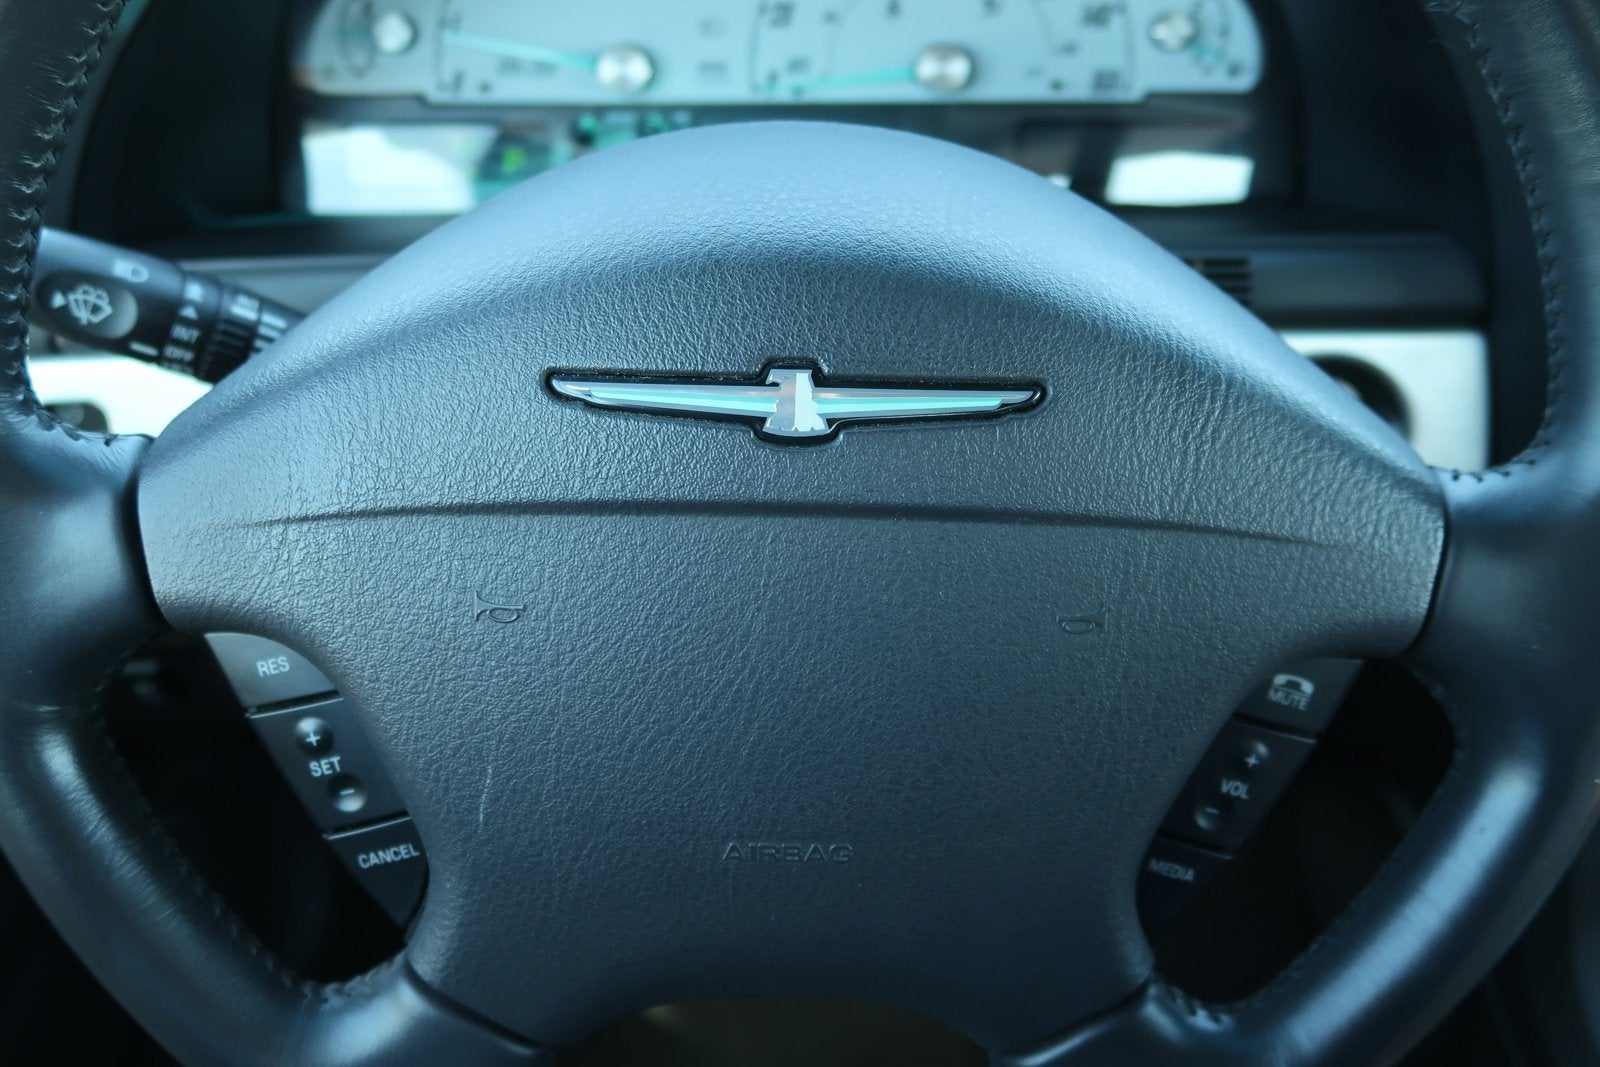 2002 Ford Thunderbird w/Hardtop Premium